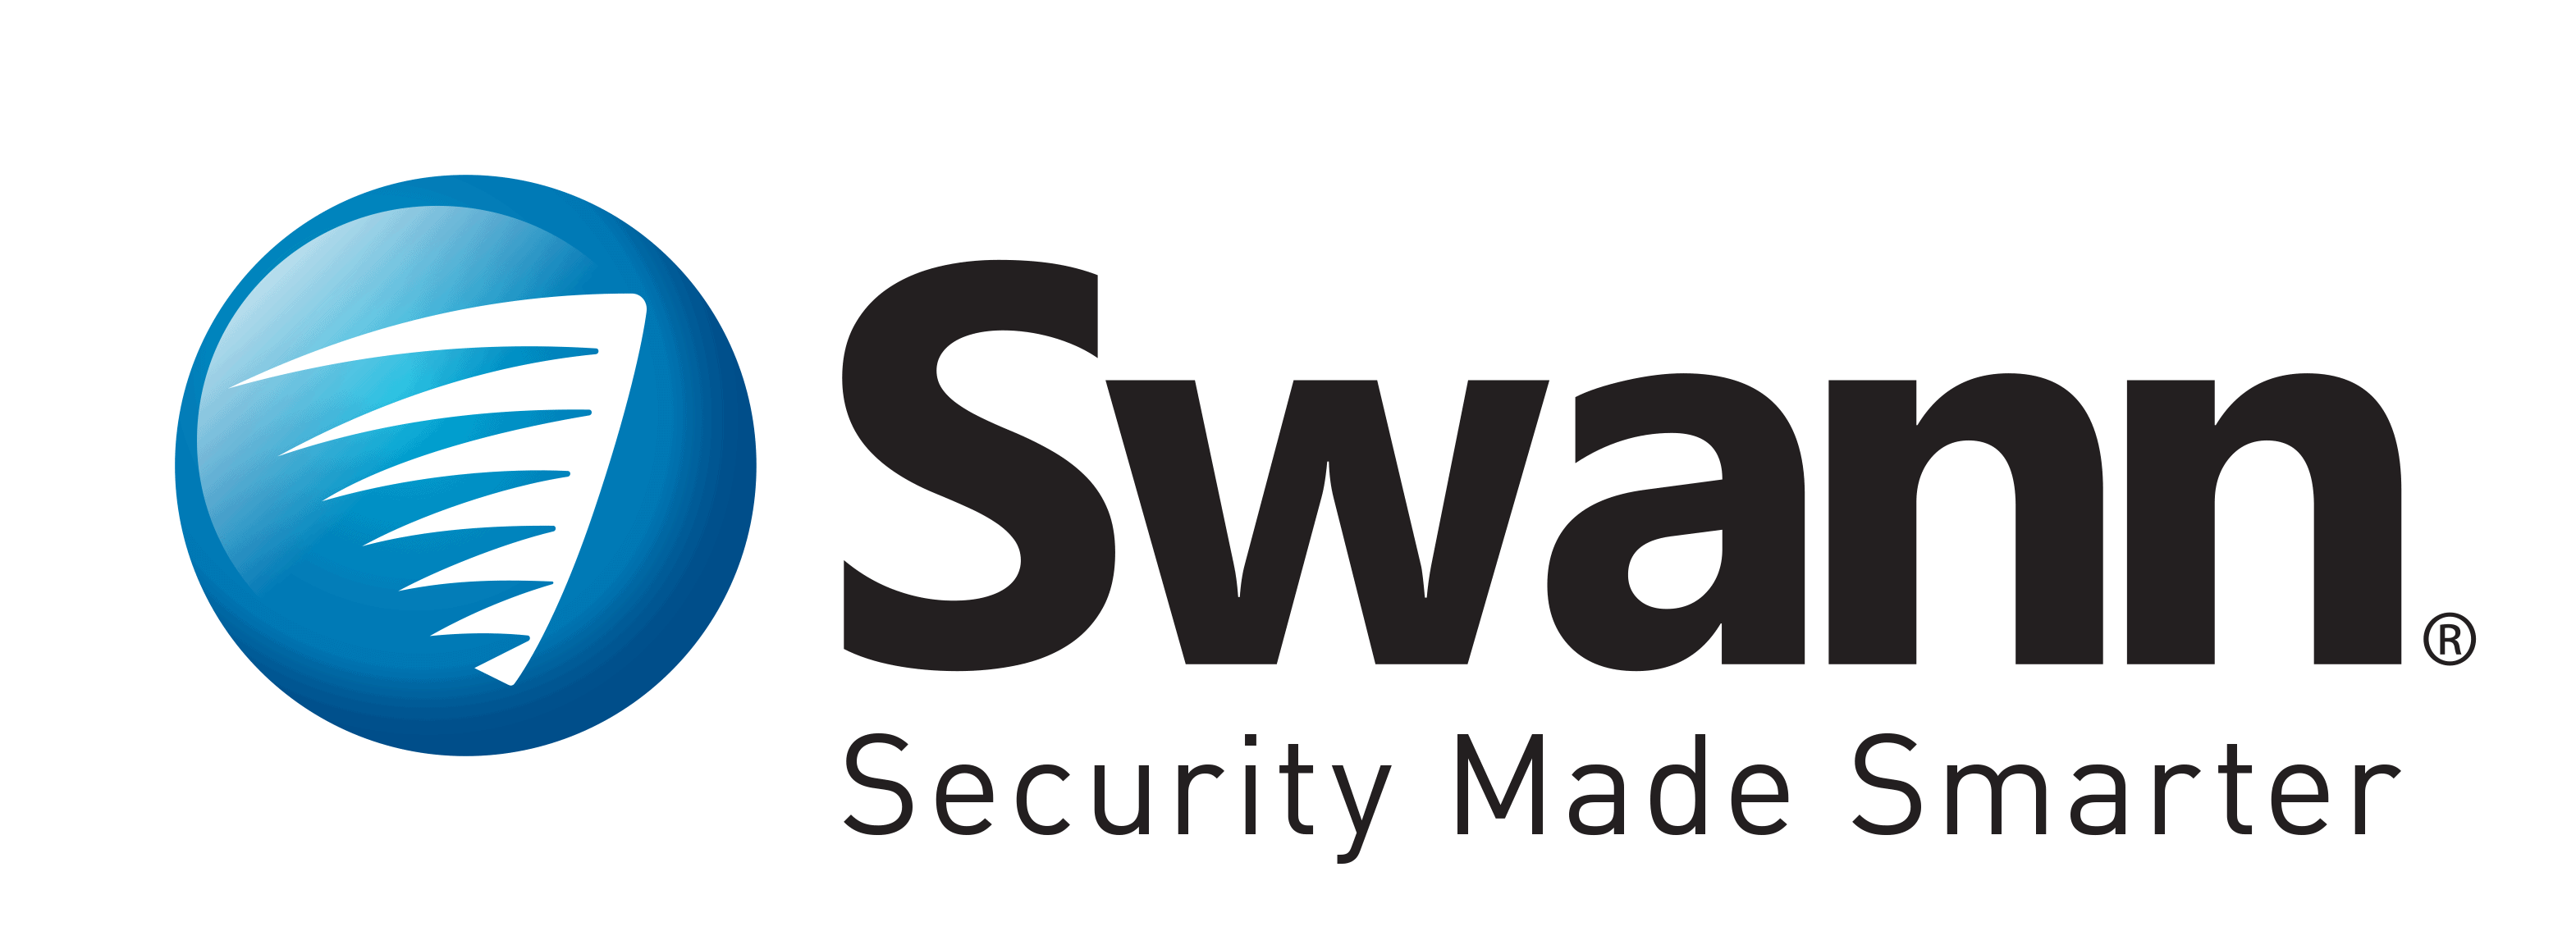 Swann Logo - Product Logo